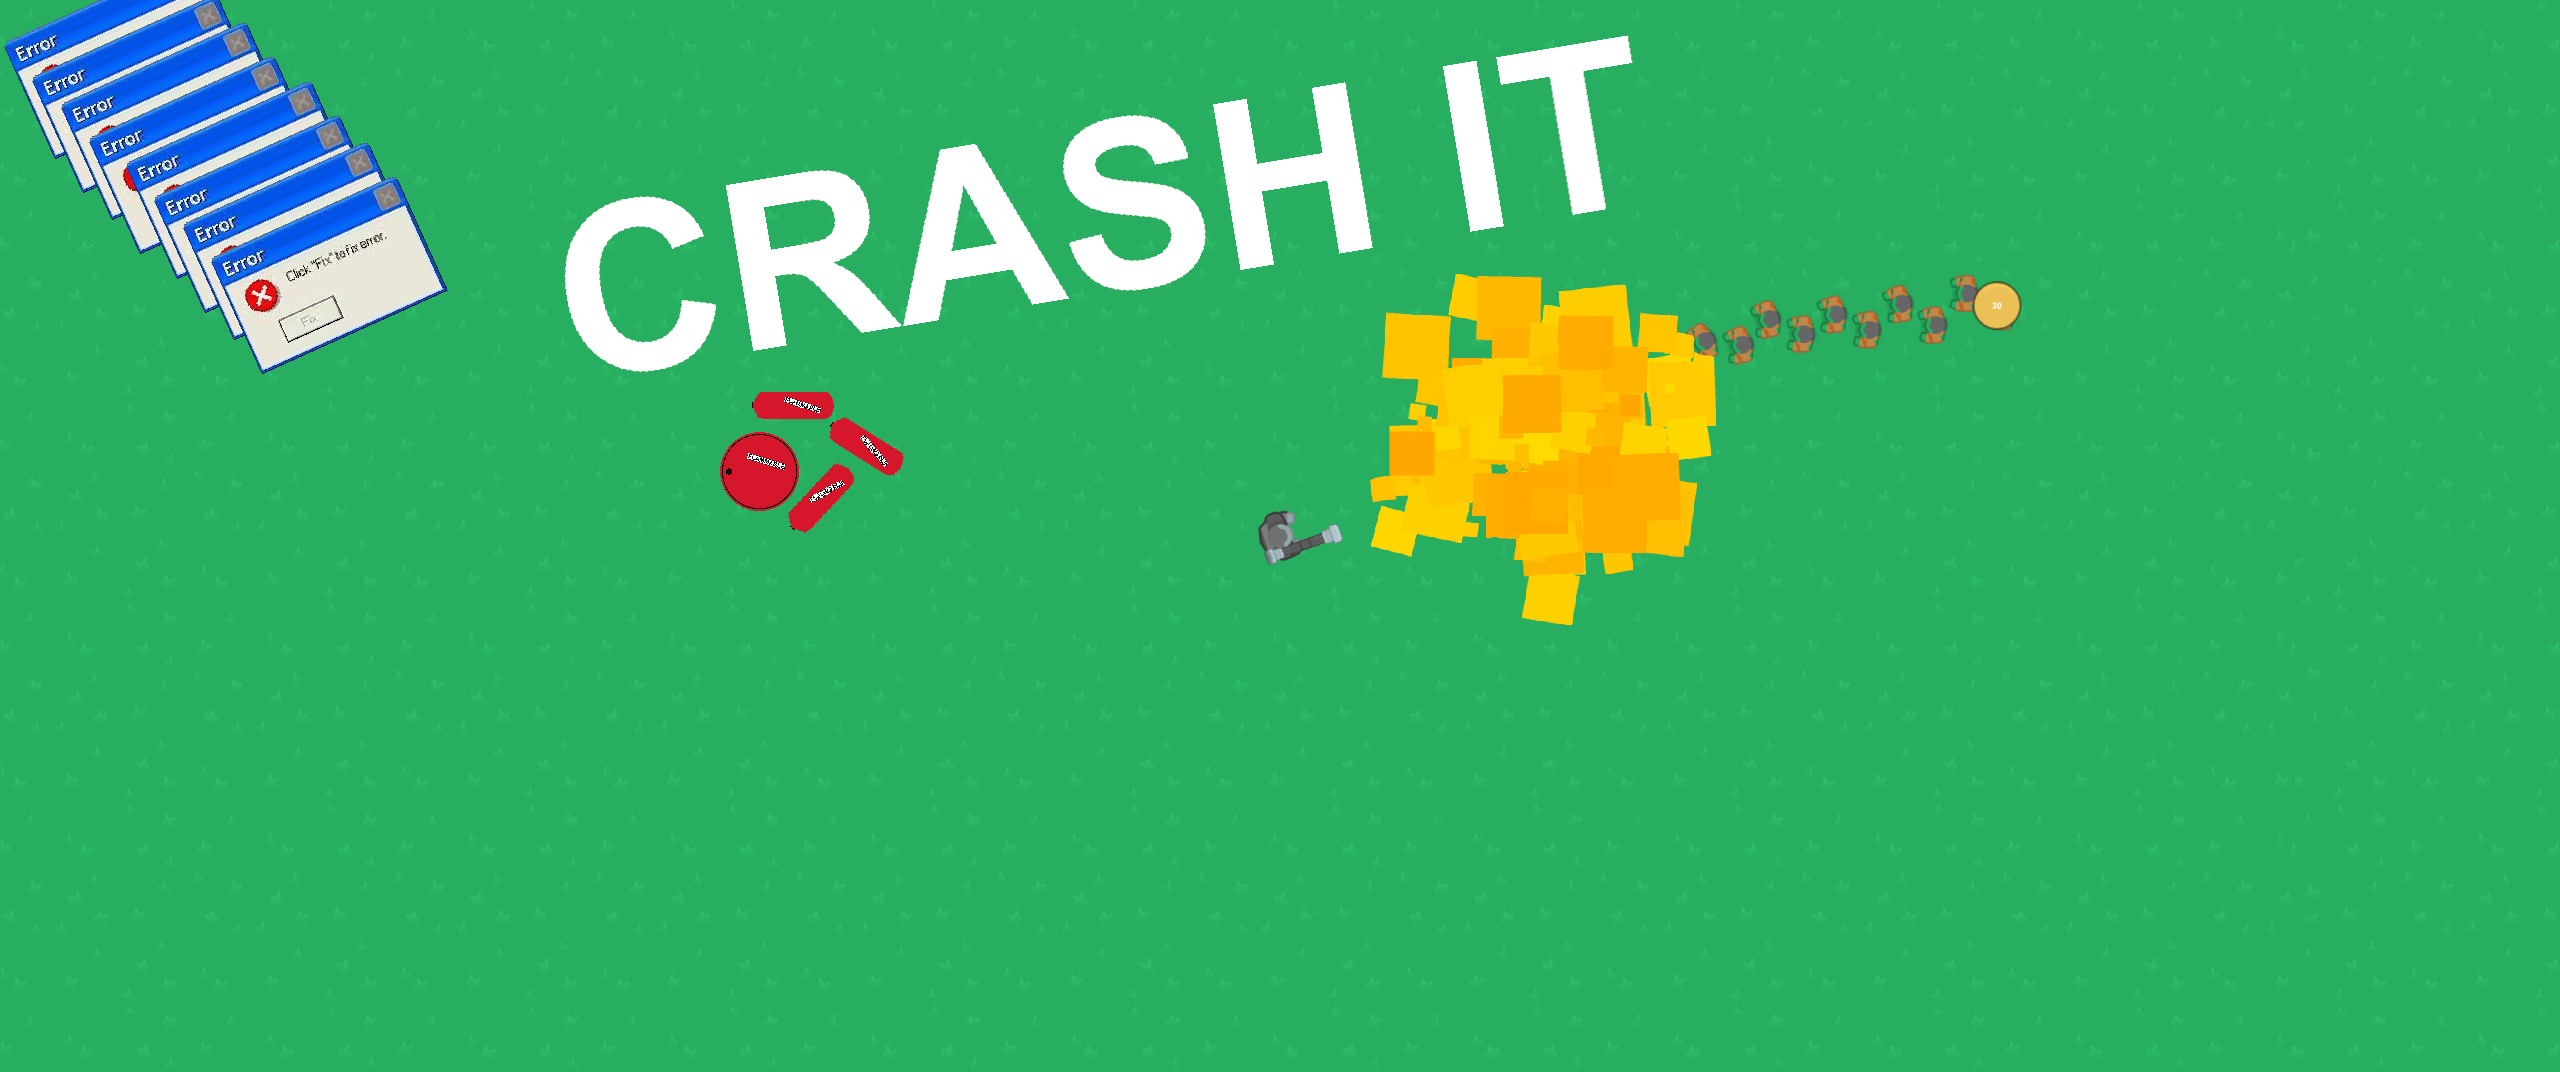 CRASH IT (Win by Crashing the Game)